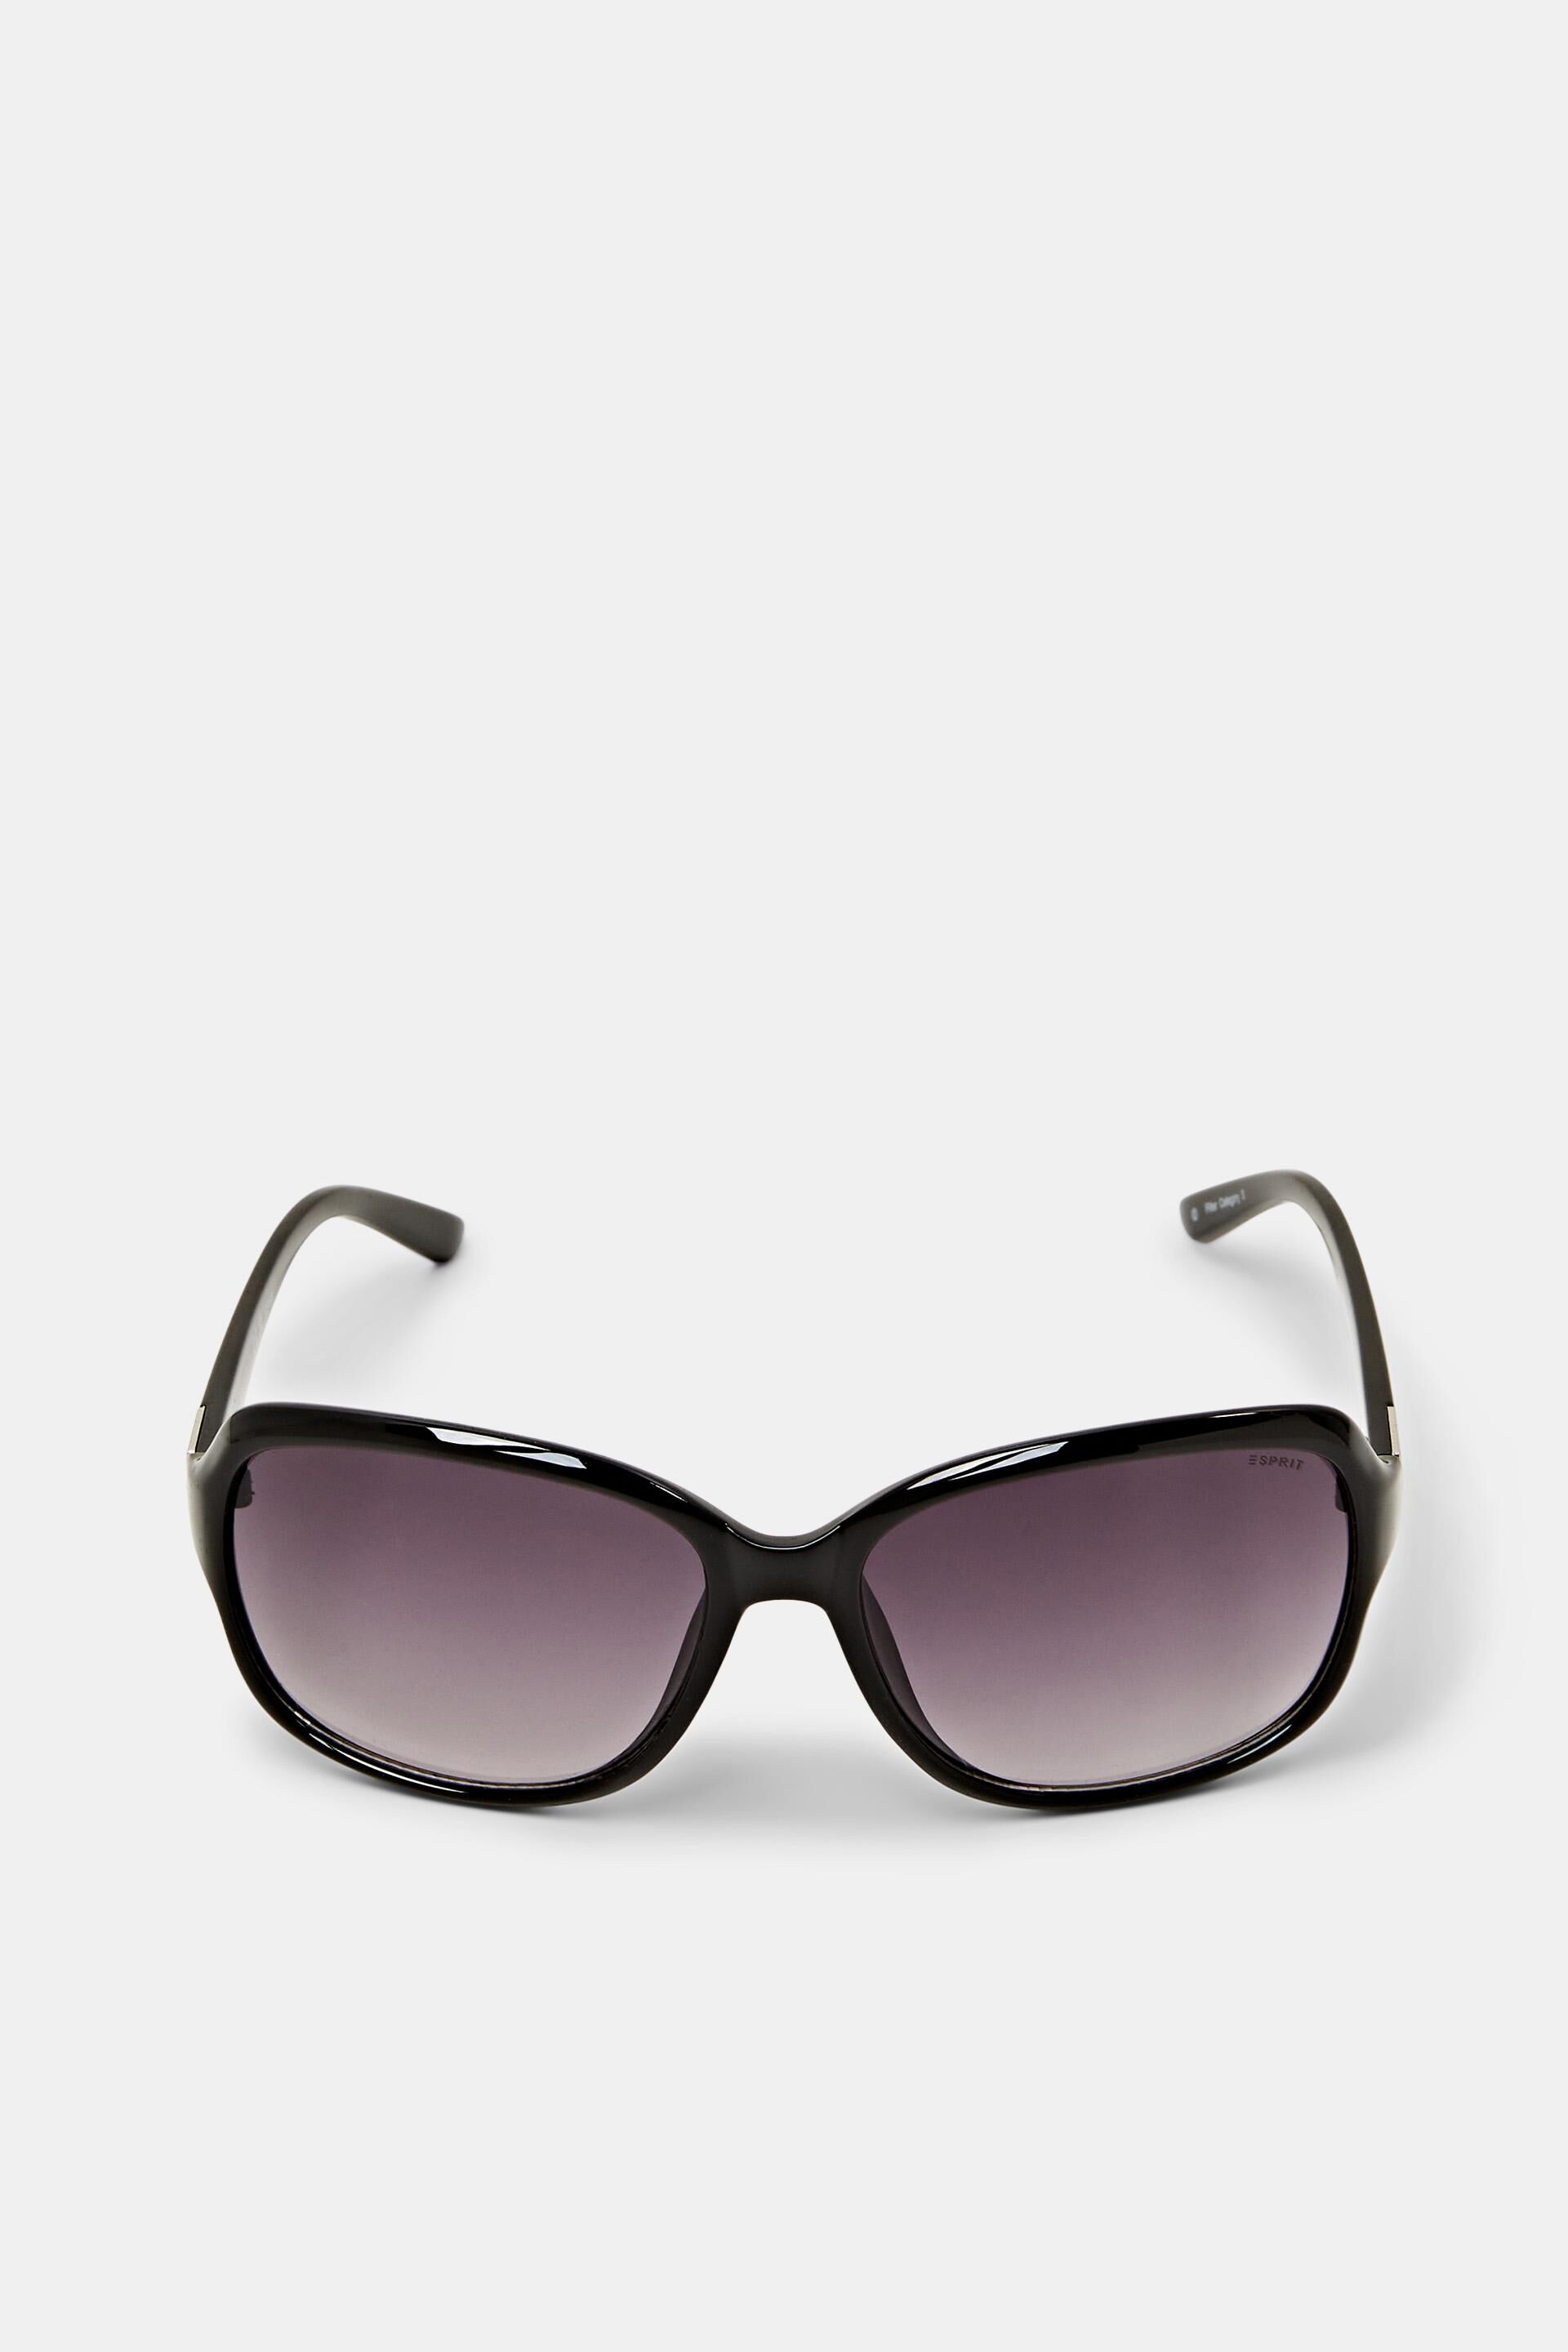 Esprit with a timeless Sunglasses design